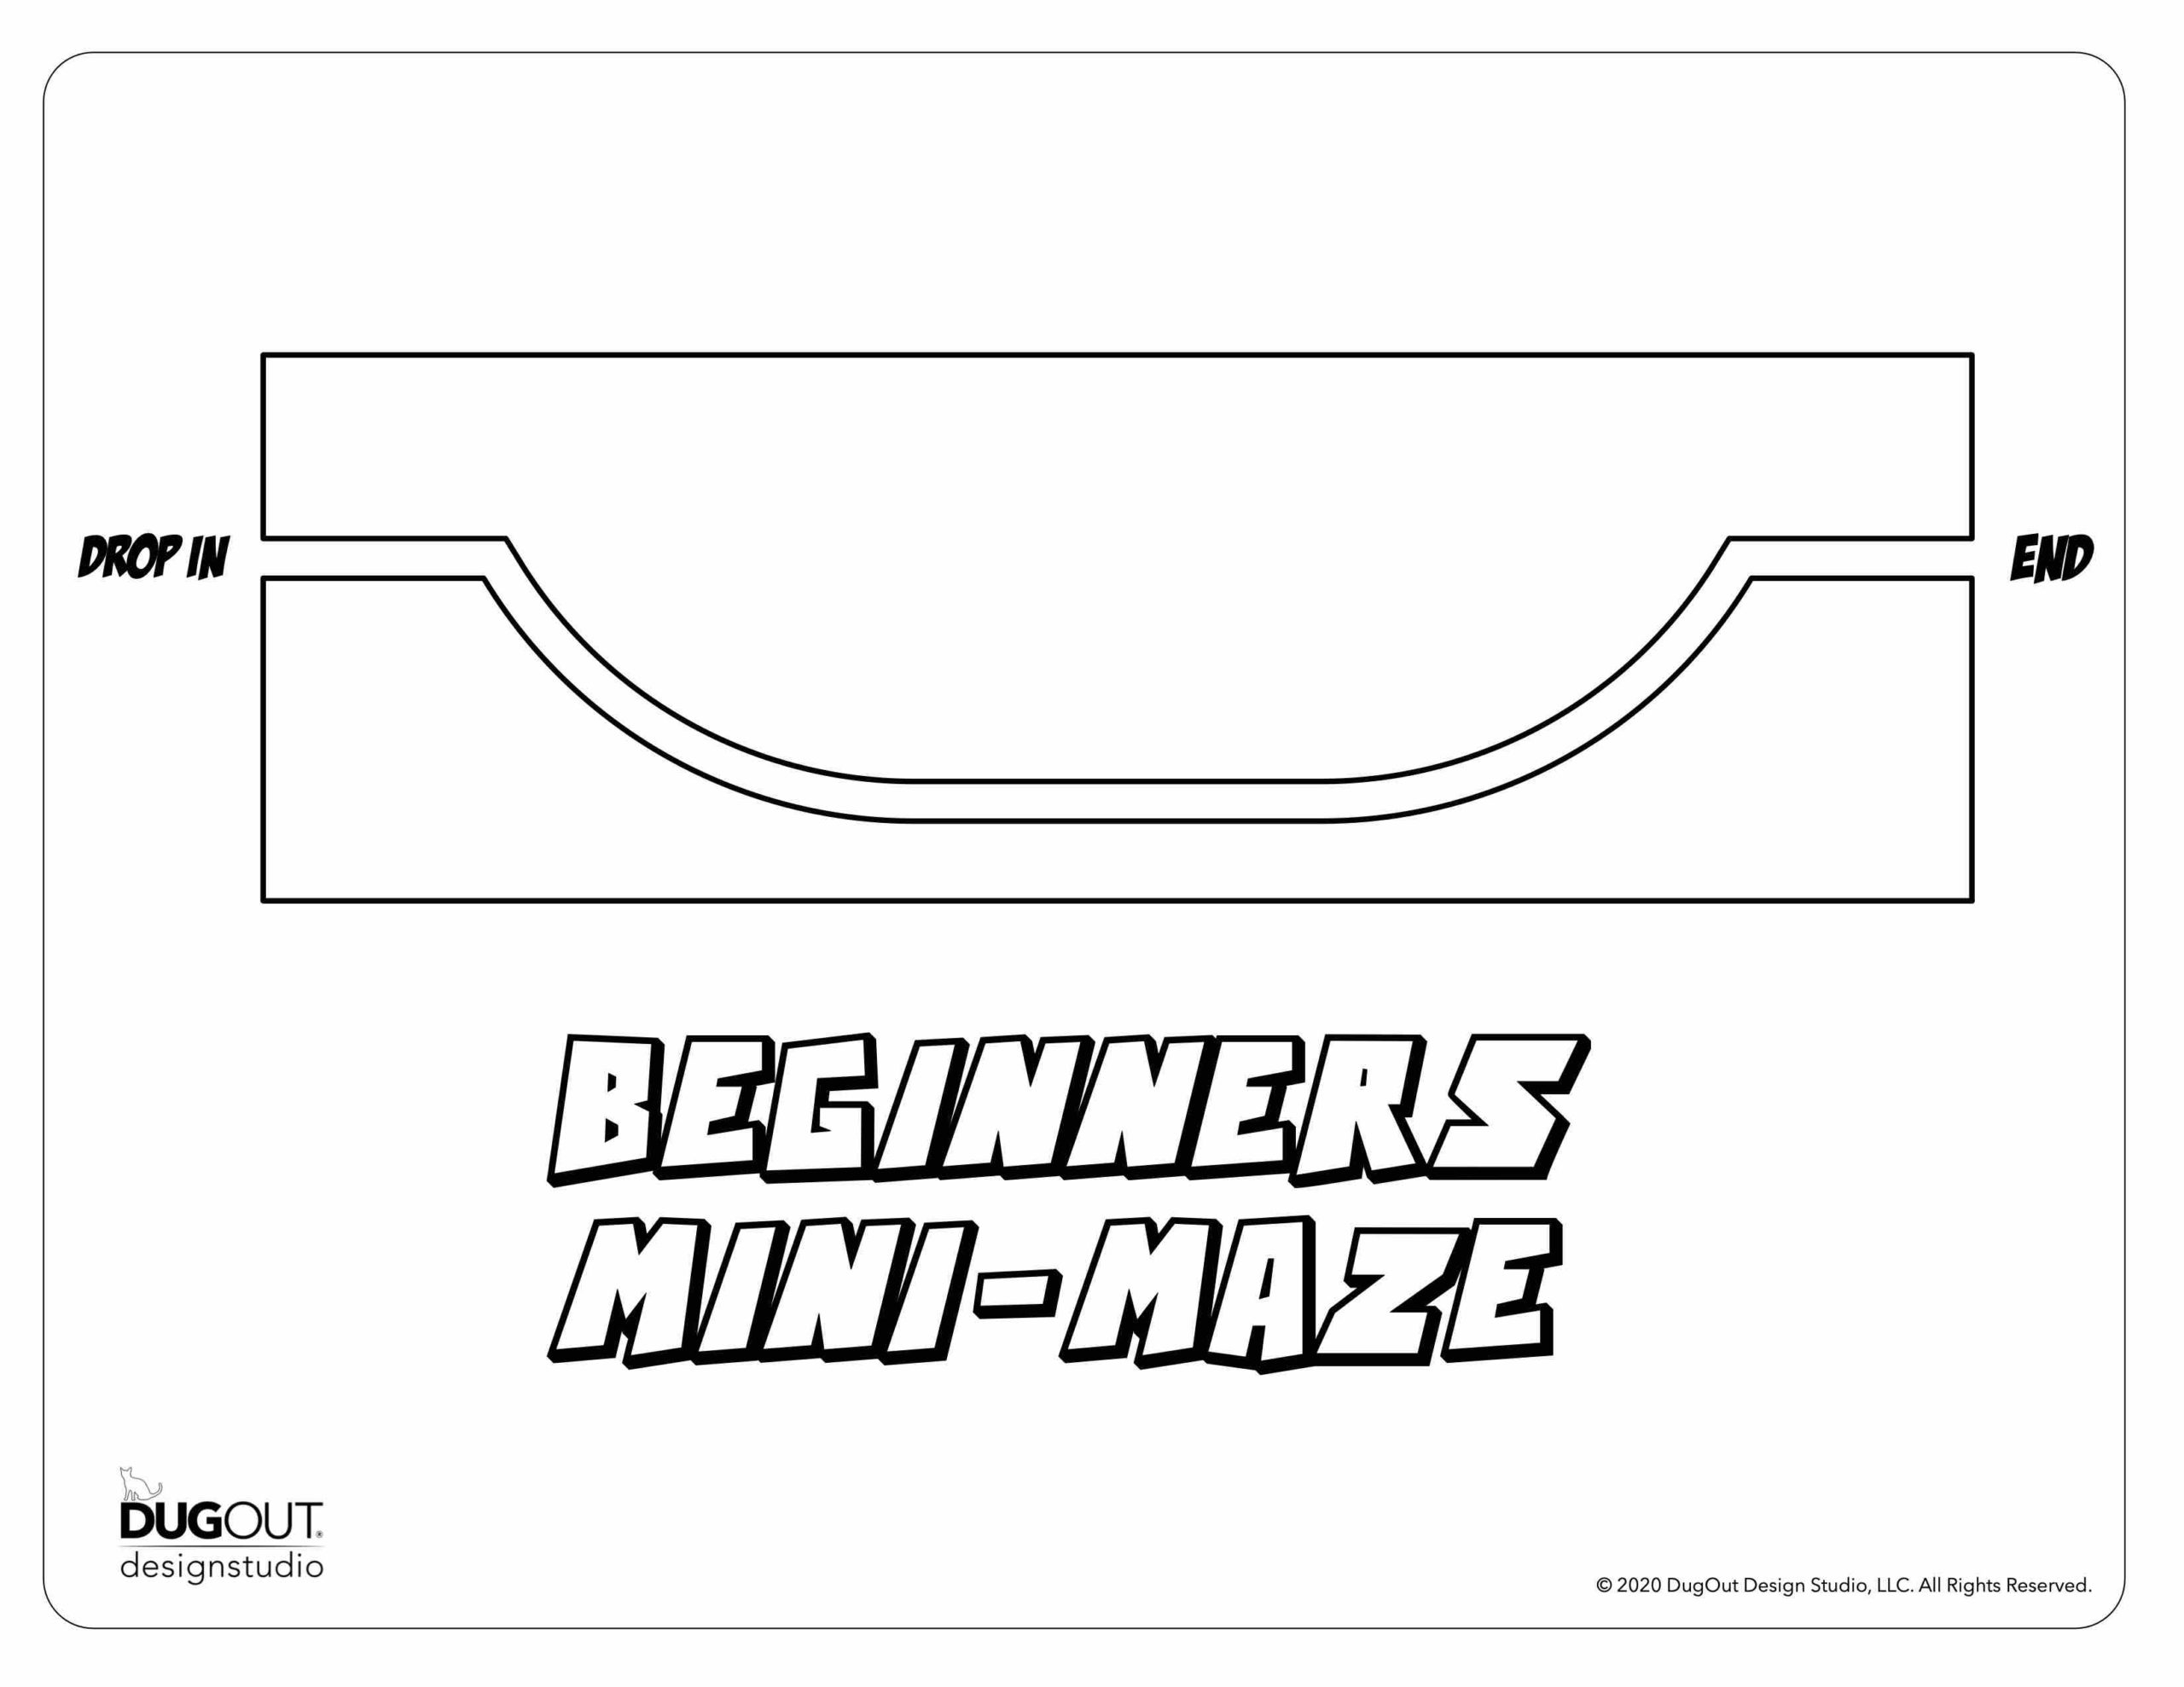 Beginners mini-maze